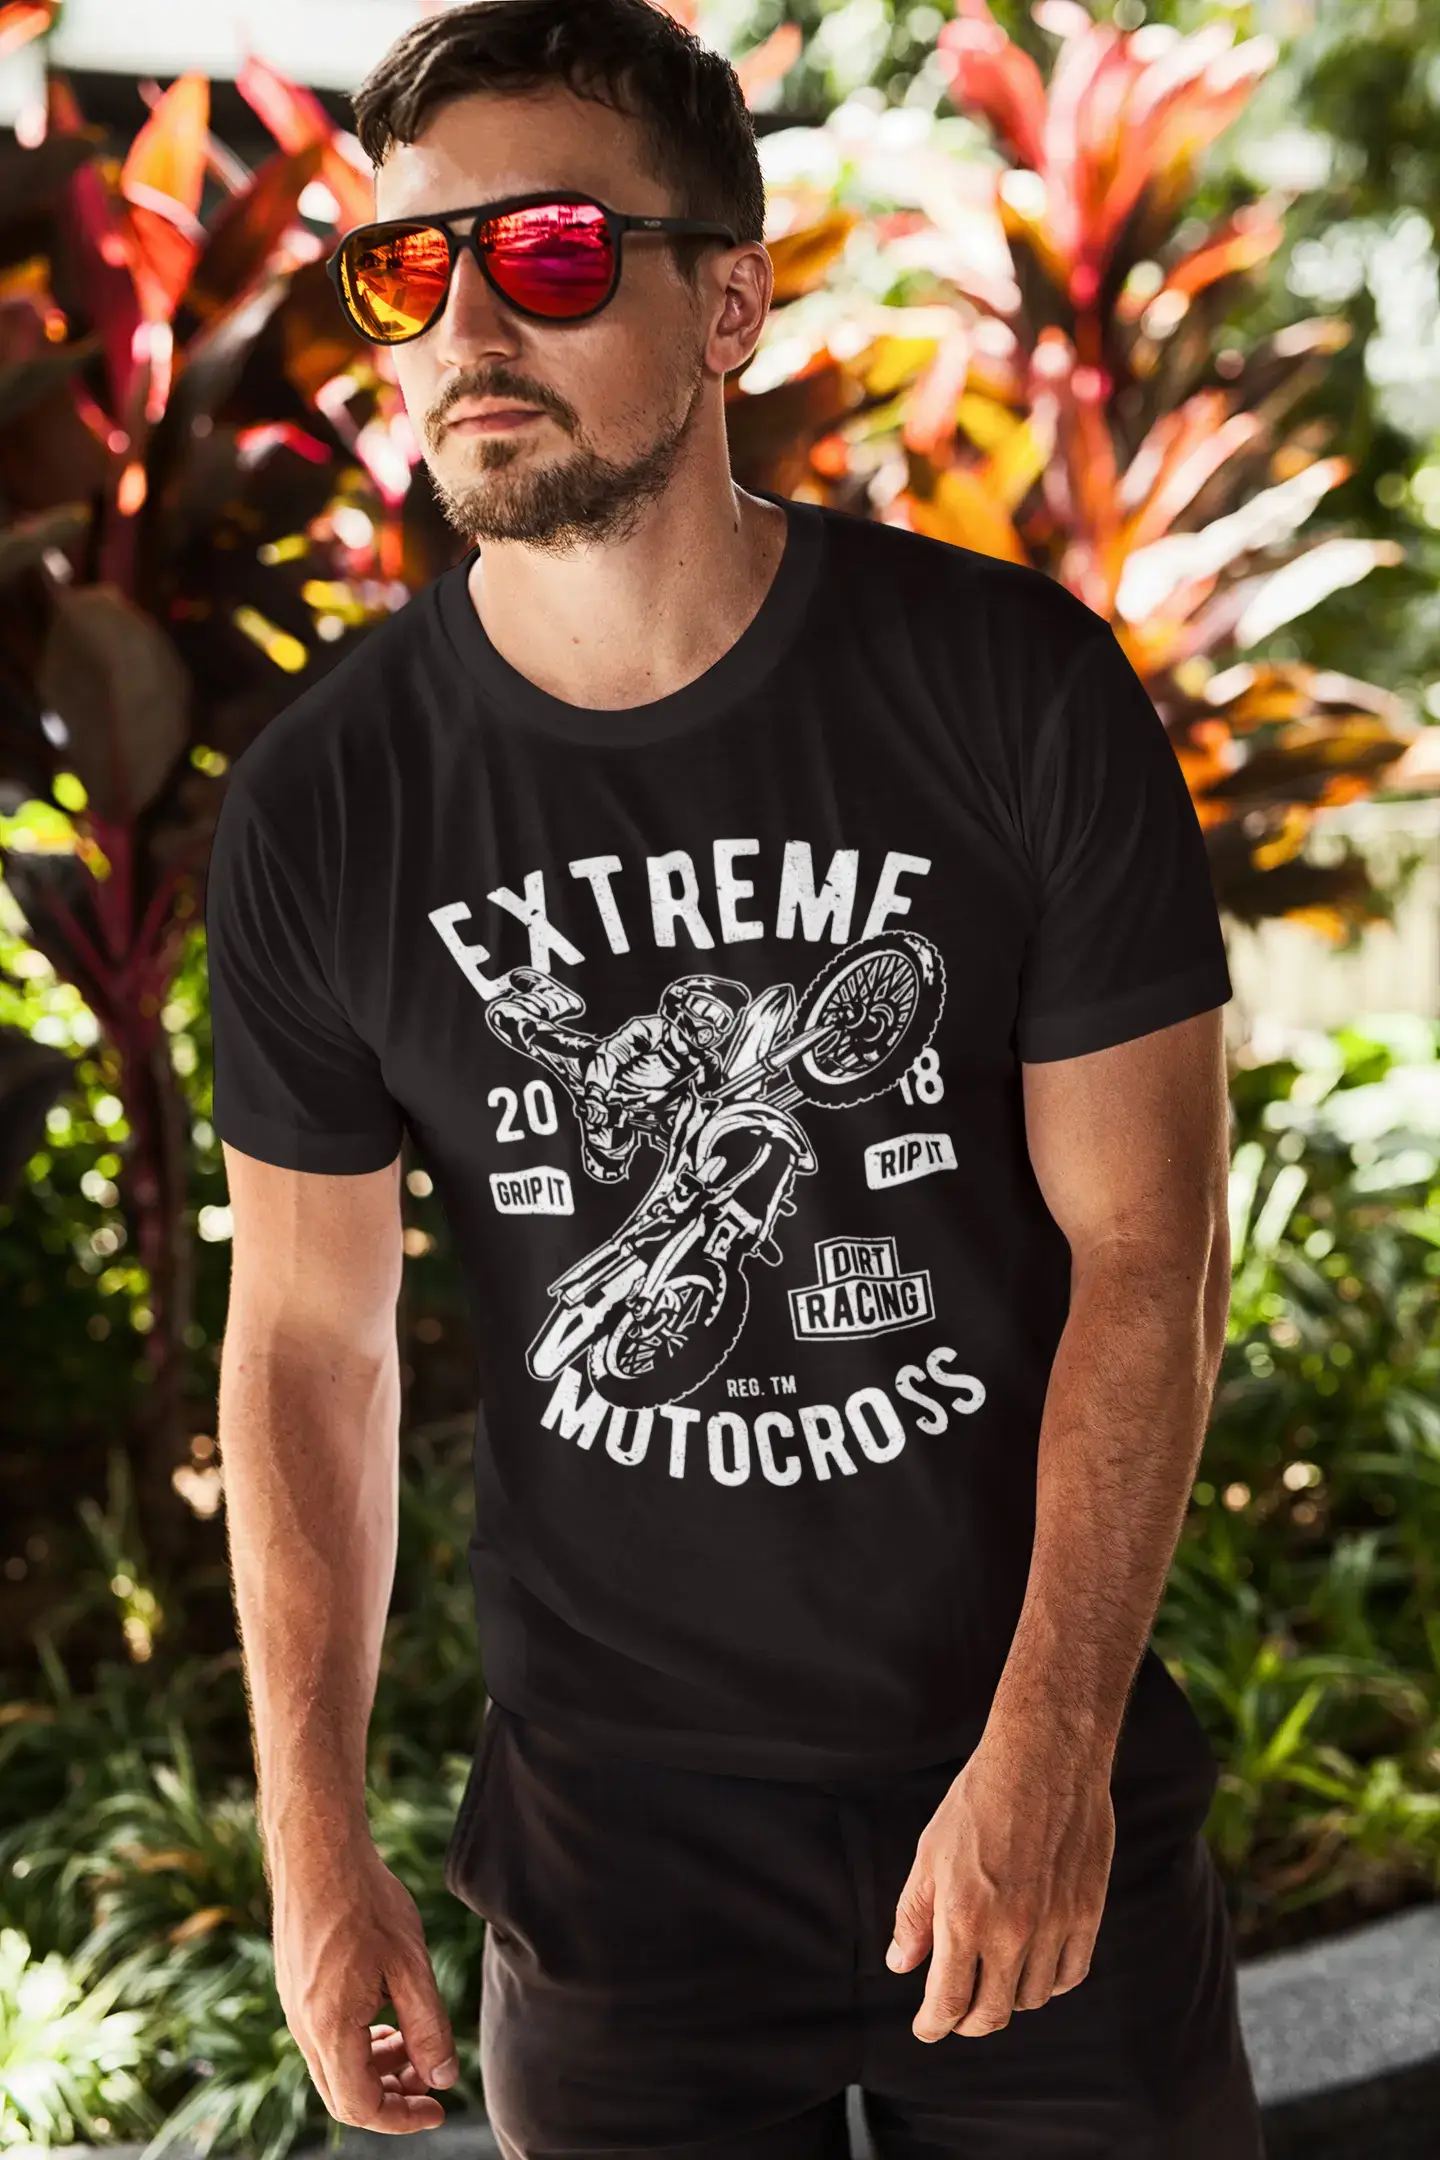 ULTRABASIC Men's Graphic T-Shirt Extreme Motorcross 2018 - Dirt Racing - Motor Lovers